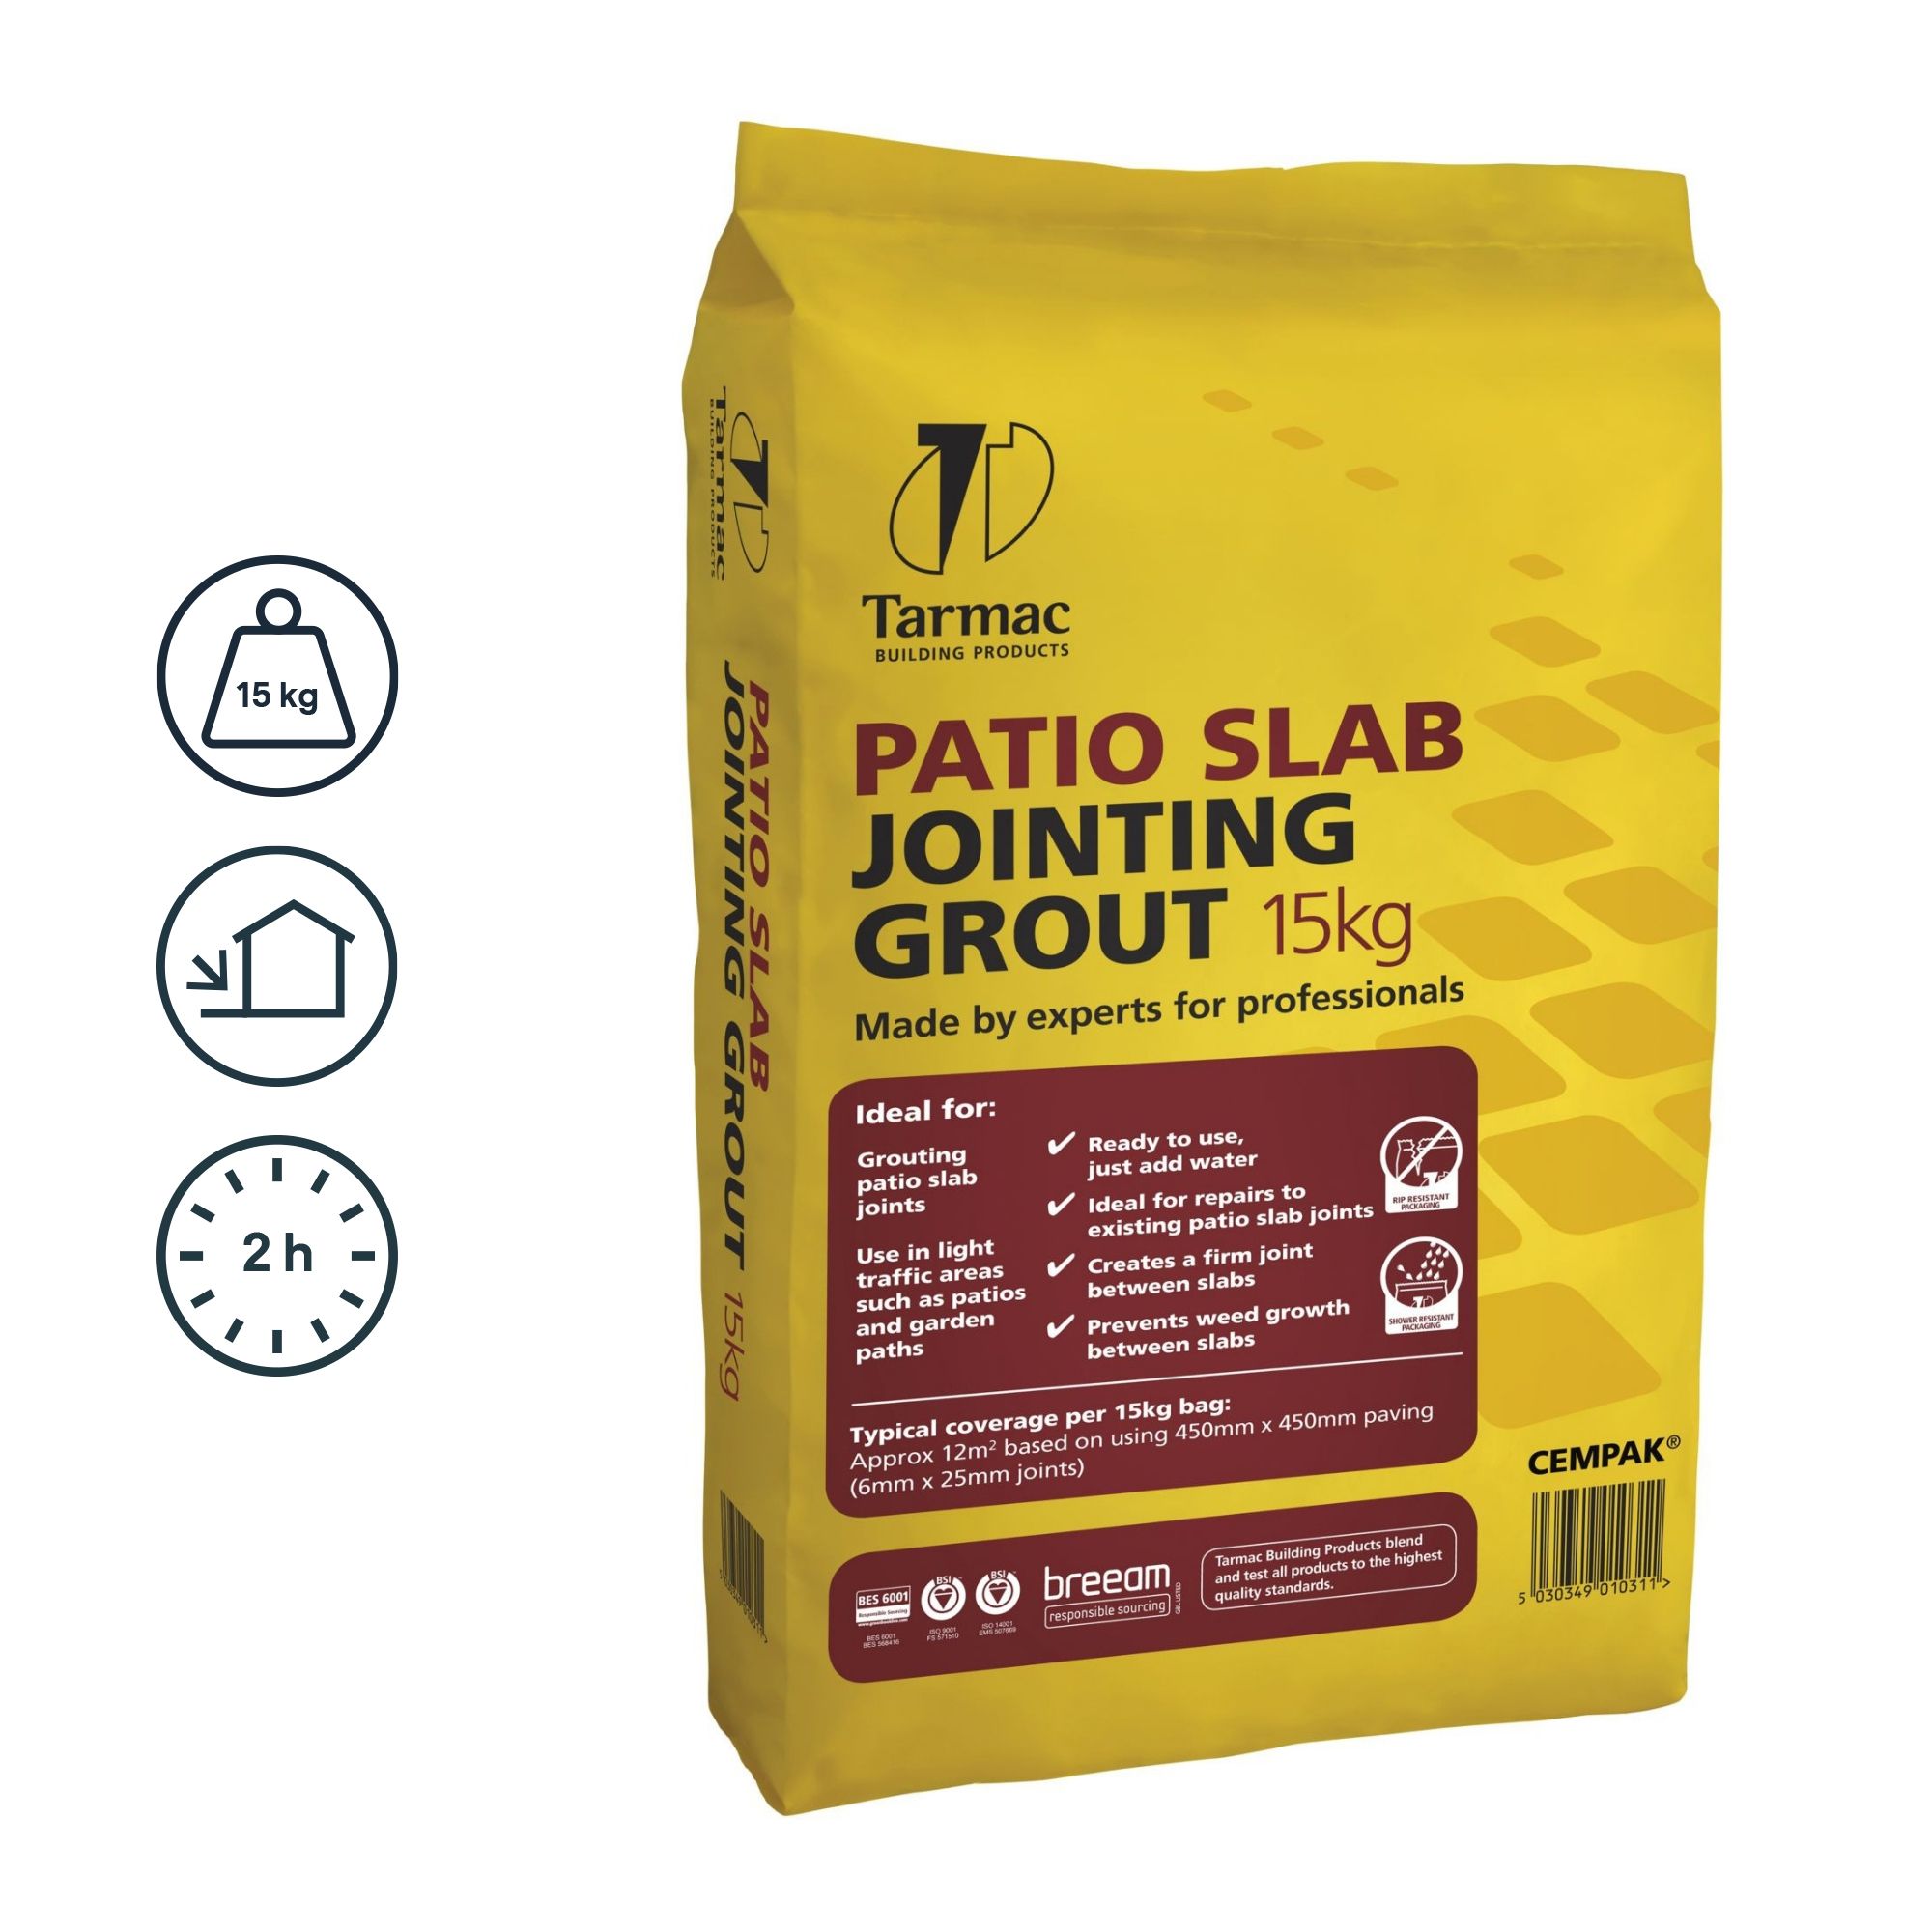 Tarmac Patio Slab Ready mixed Grey Grout, 15kg Bag